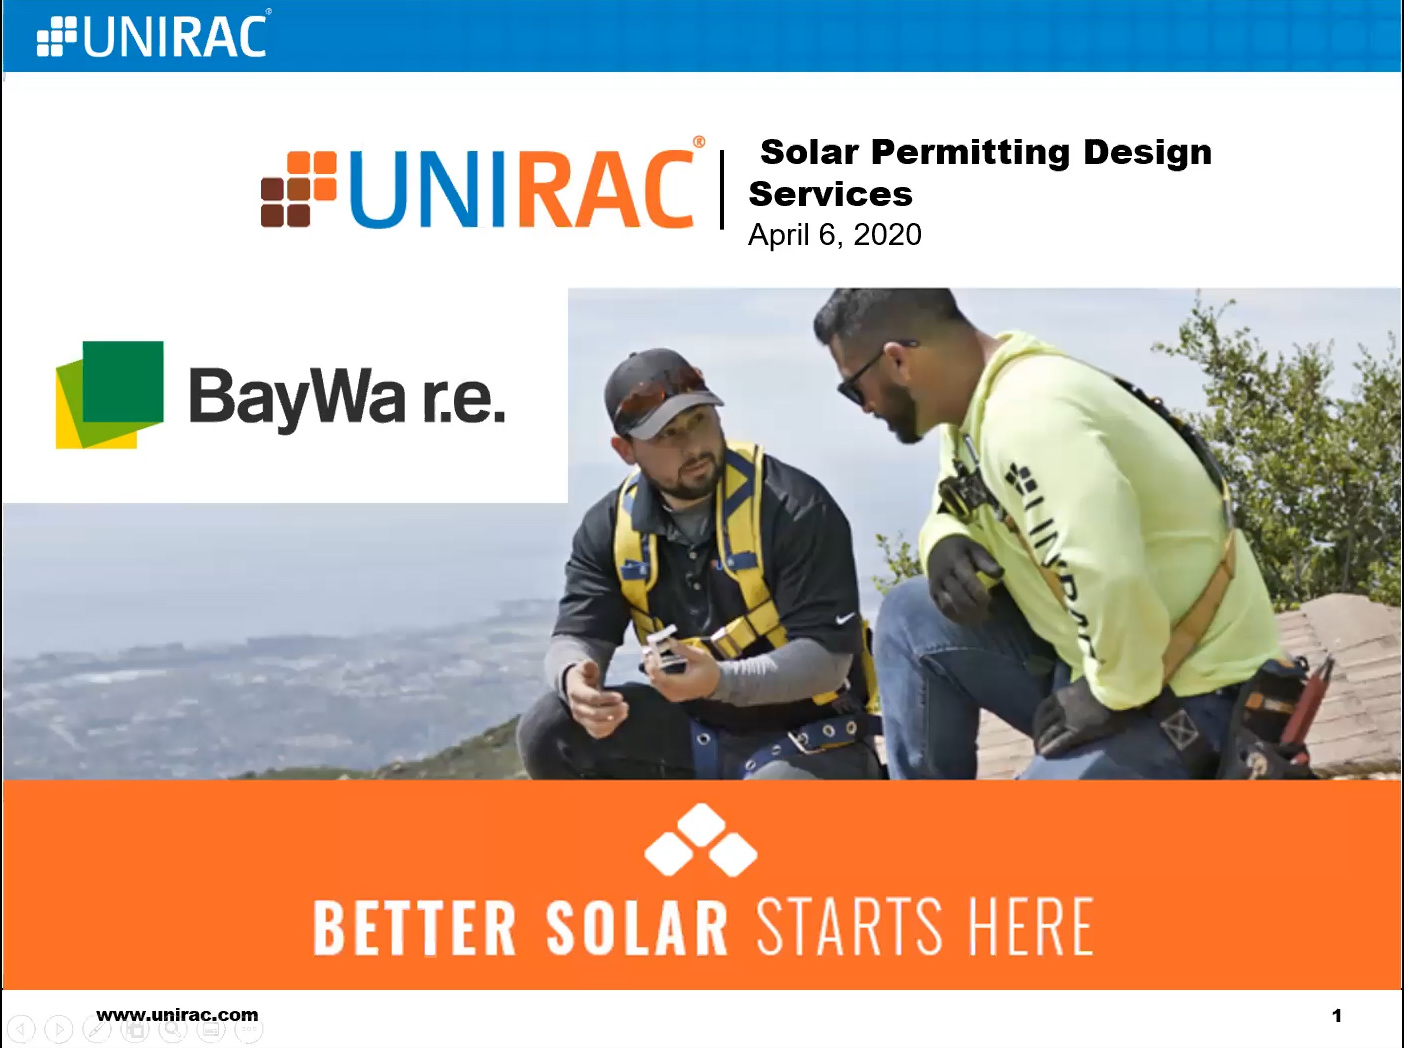 Solar Permitting Design Services from Unirac